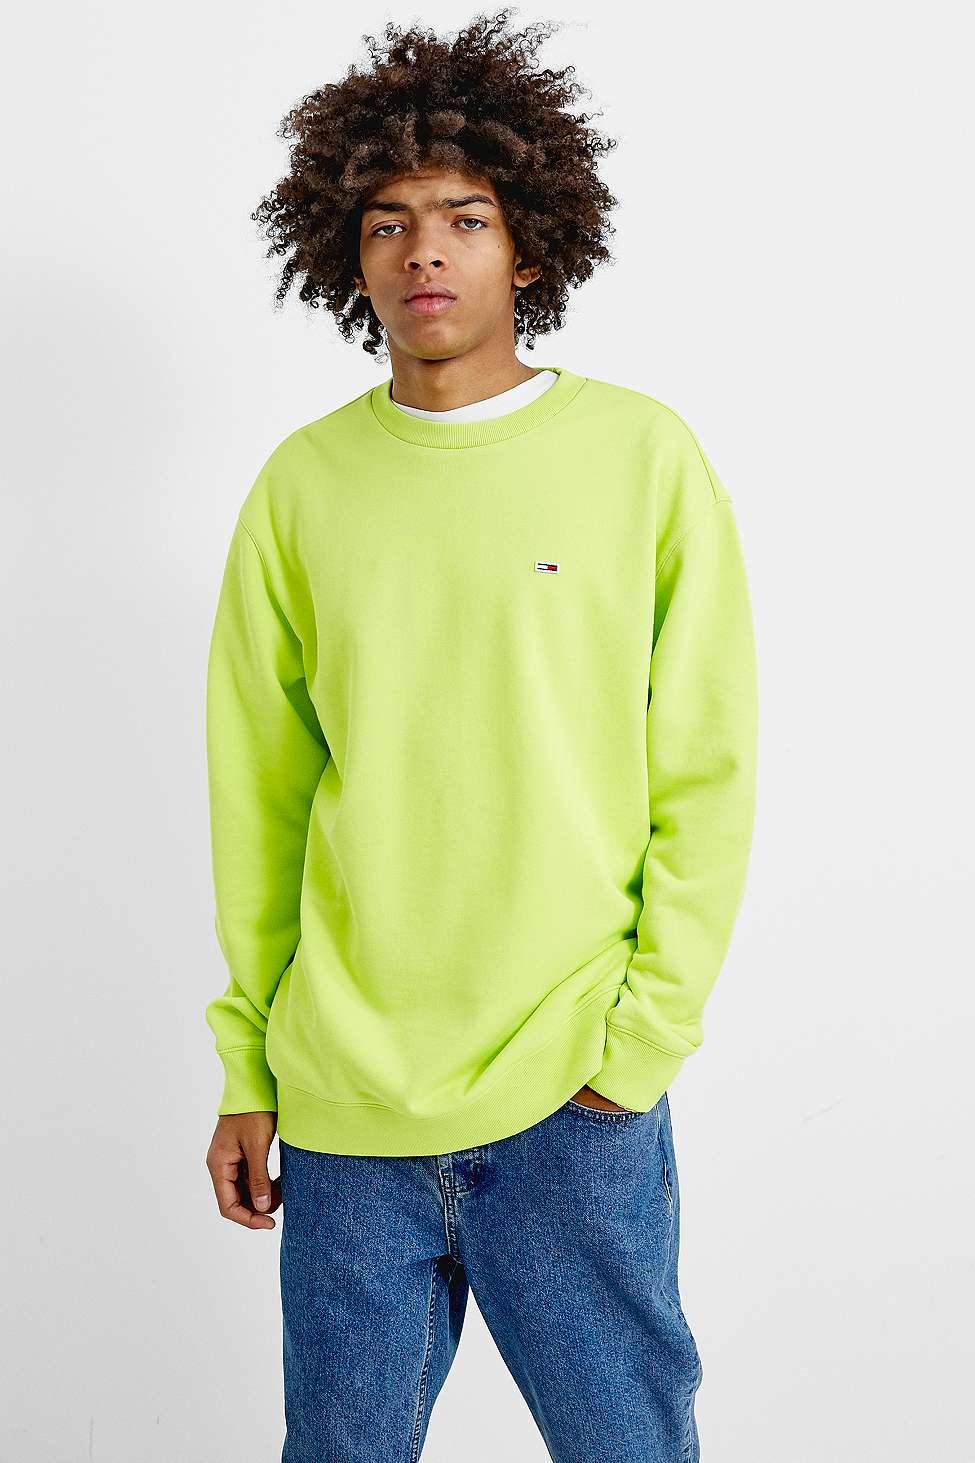 tommy hilfiger neon hoodie